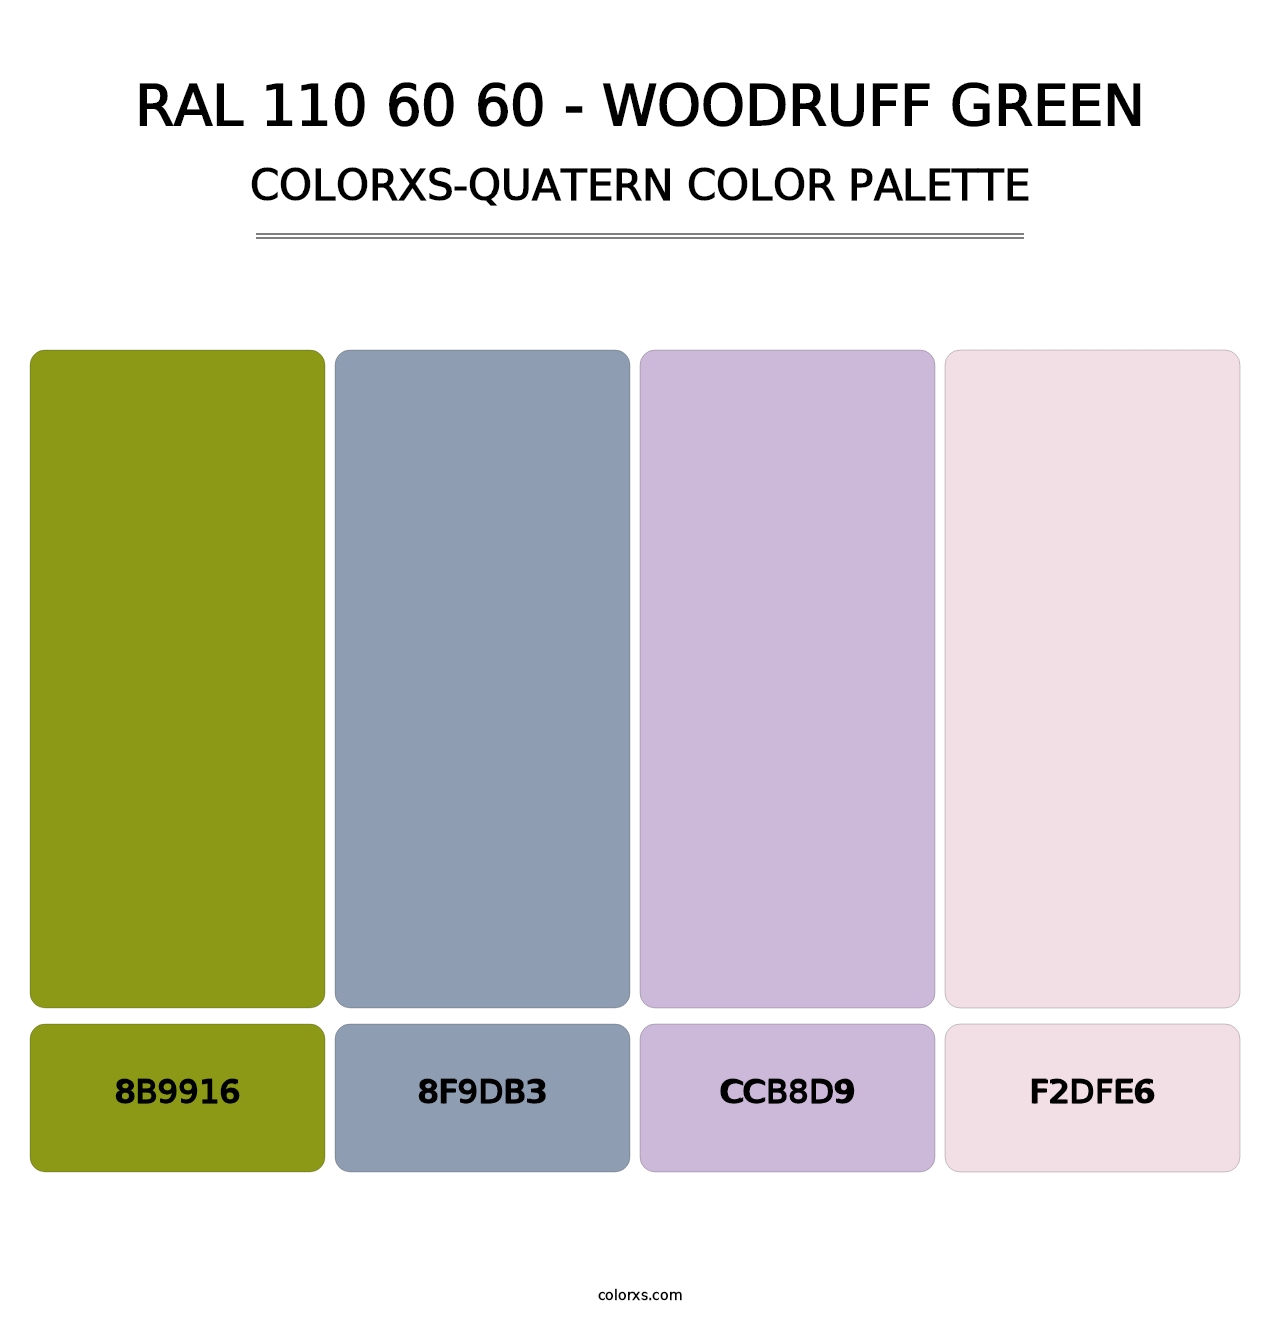 RAL 110 60 60 - Woodruff Green - Colorxs Quatern Palette